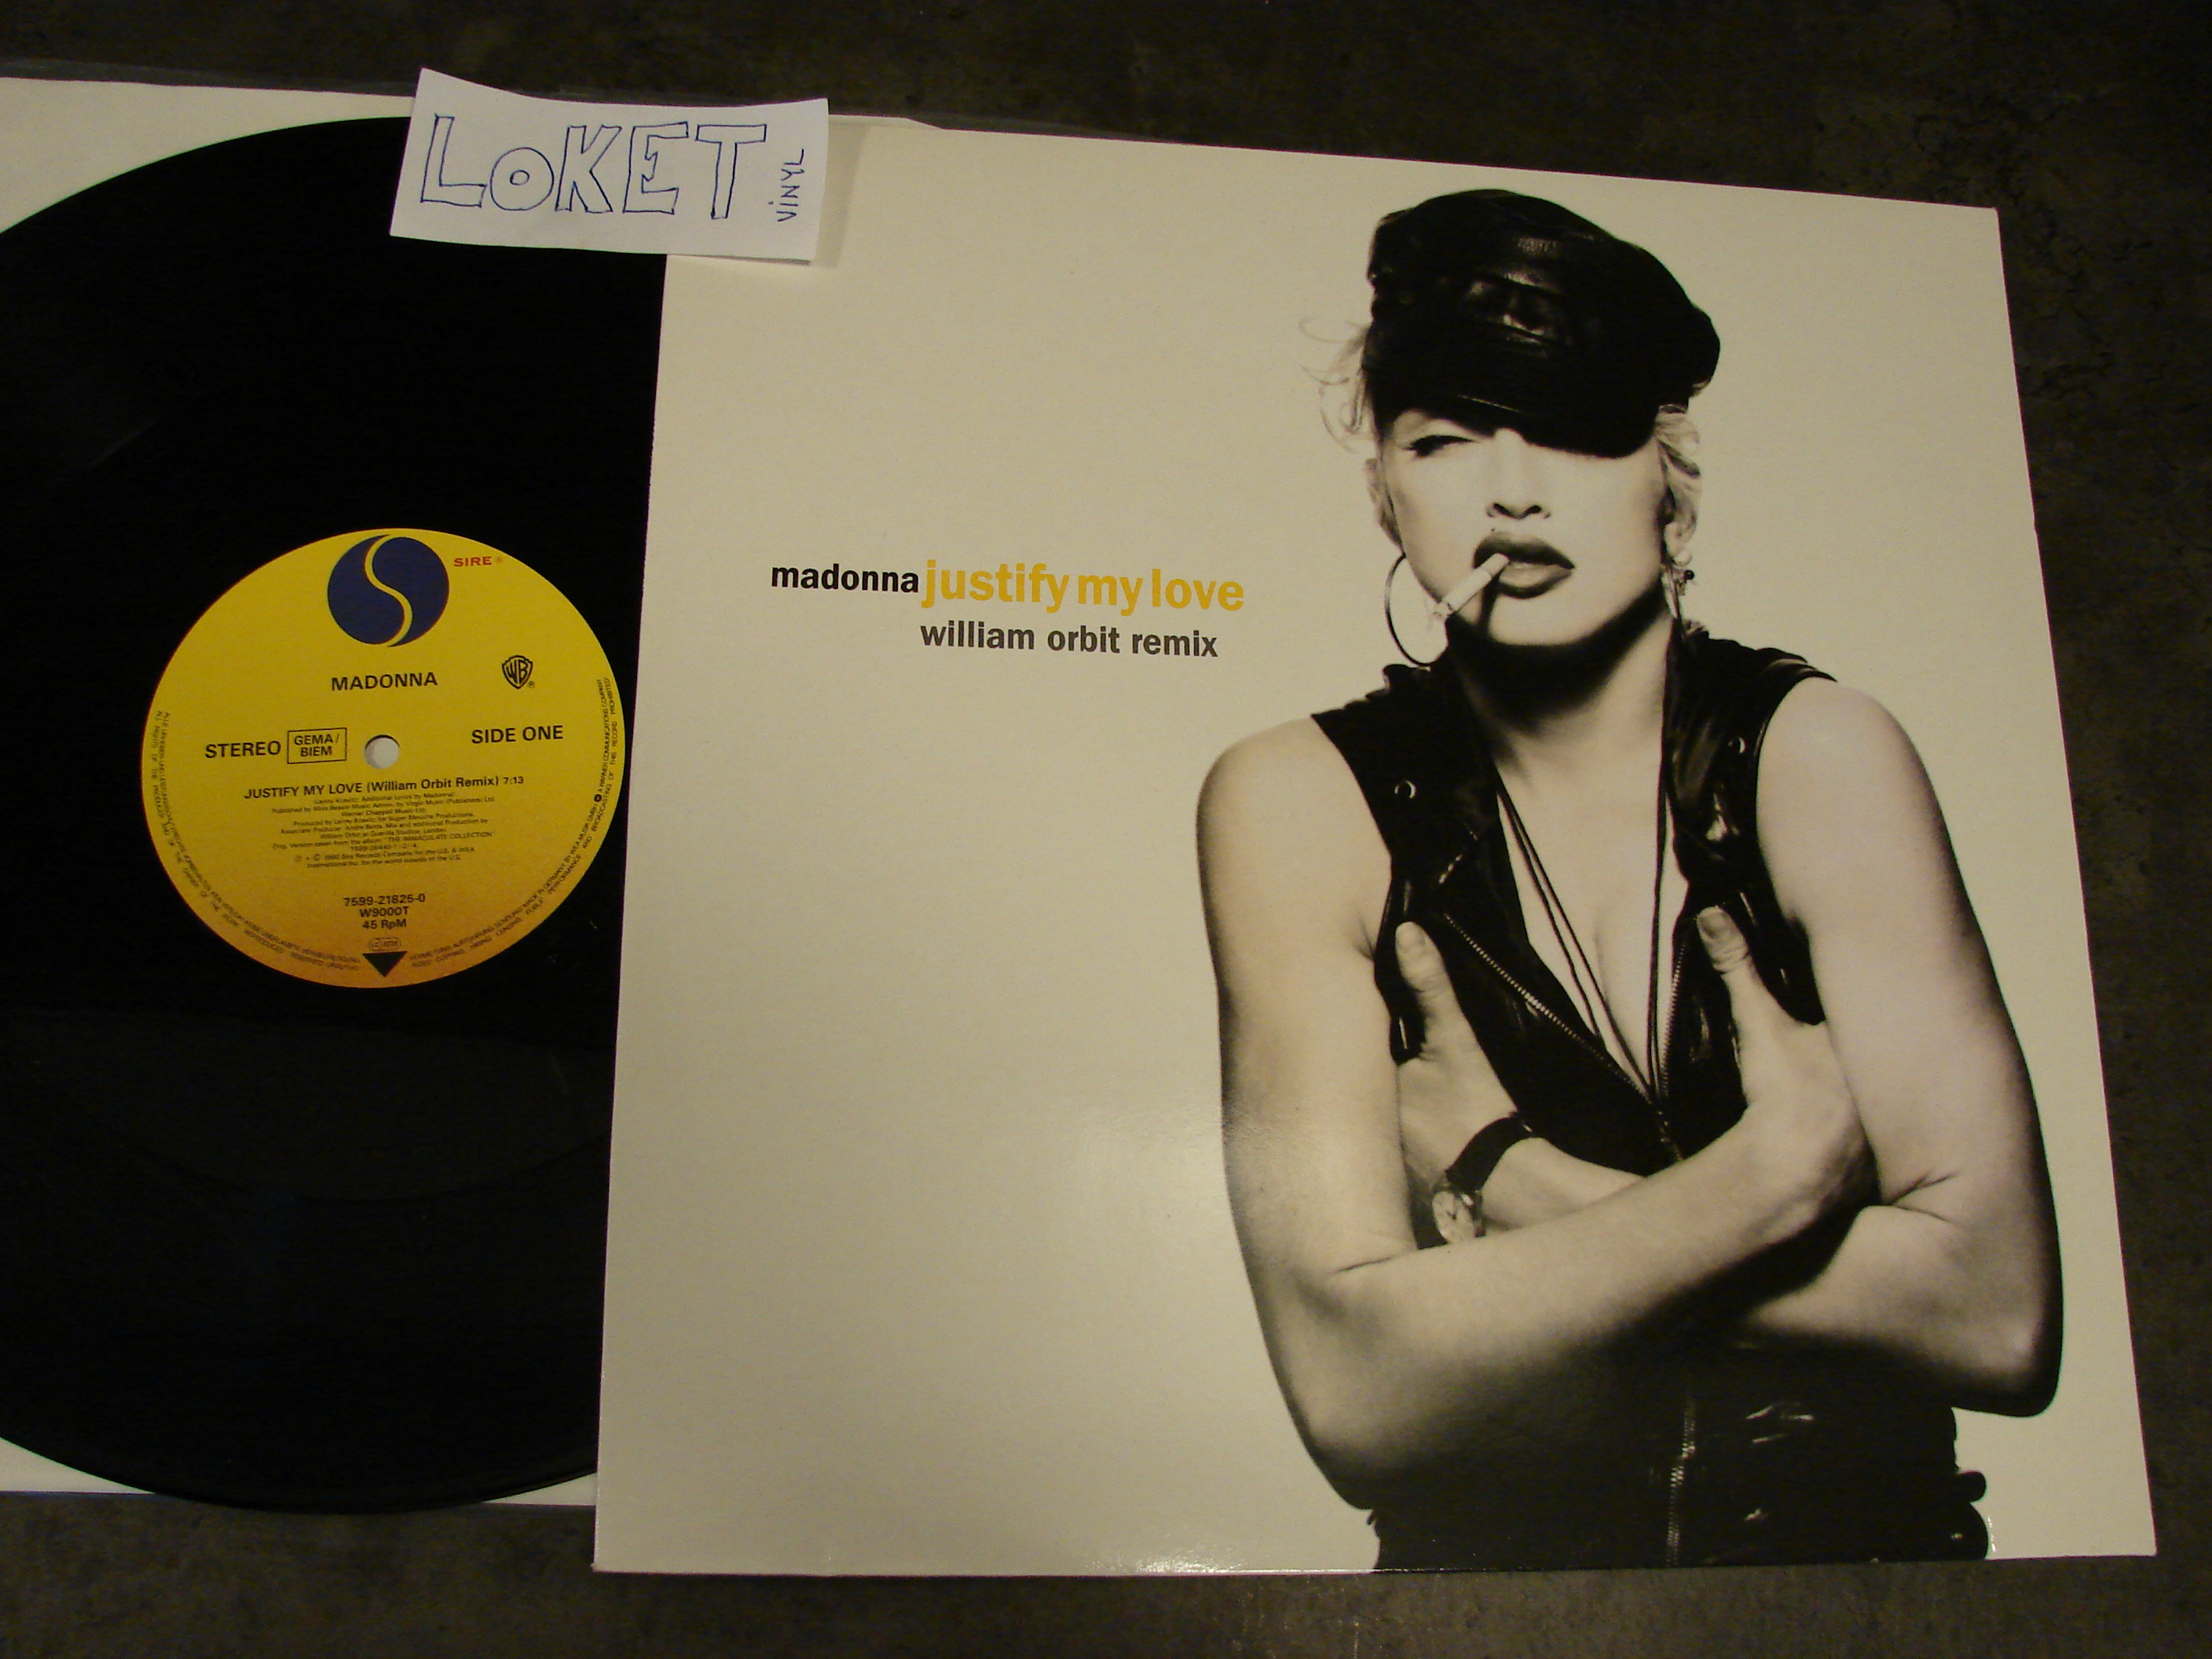 Madonna-Justify My Love  William Orbit Remix-12INCH VINYL-FLAC-1990-LoKET